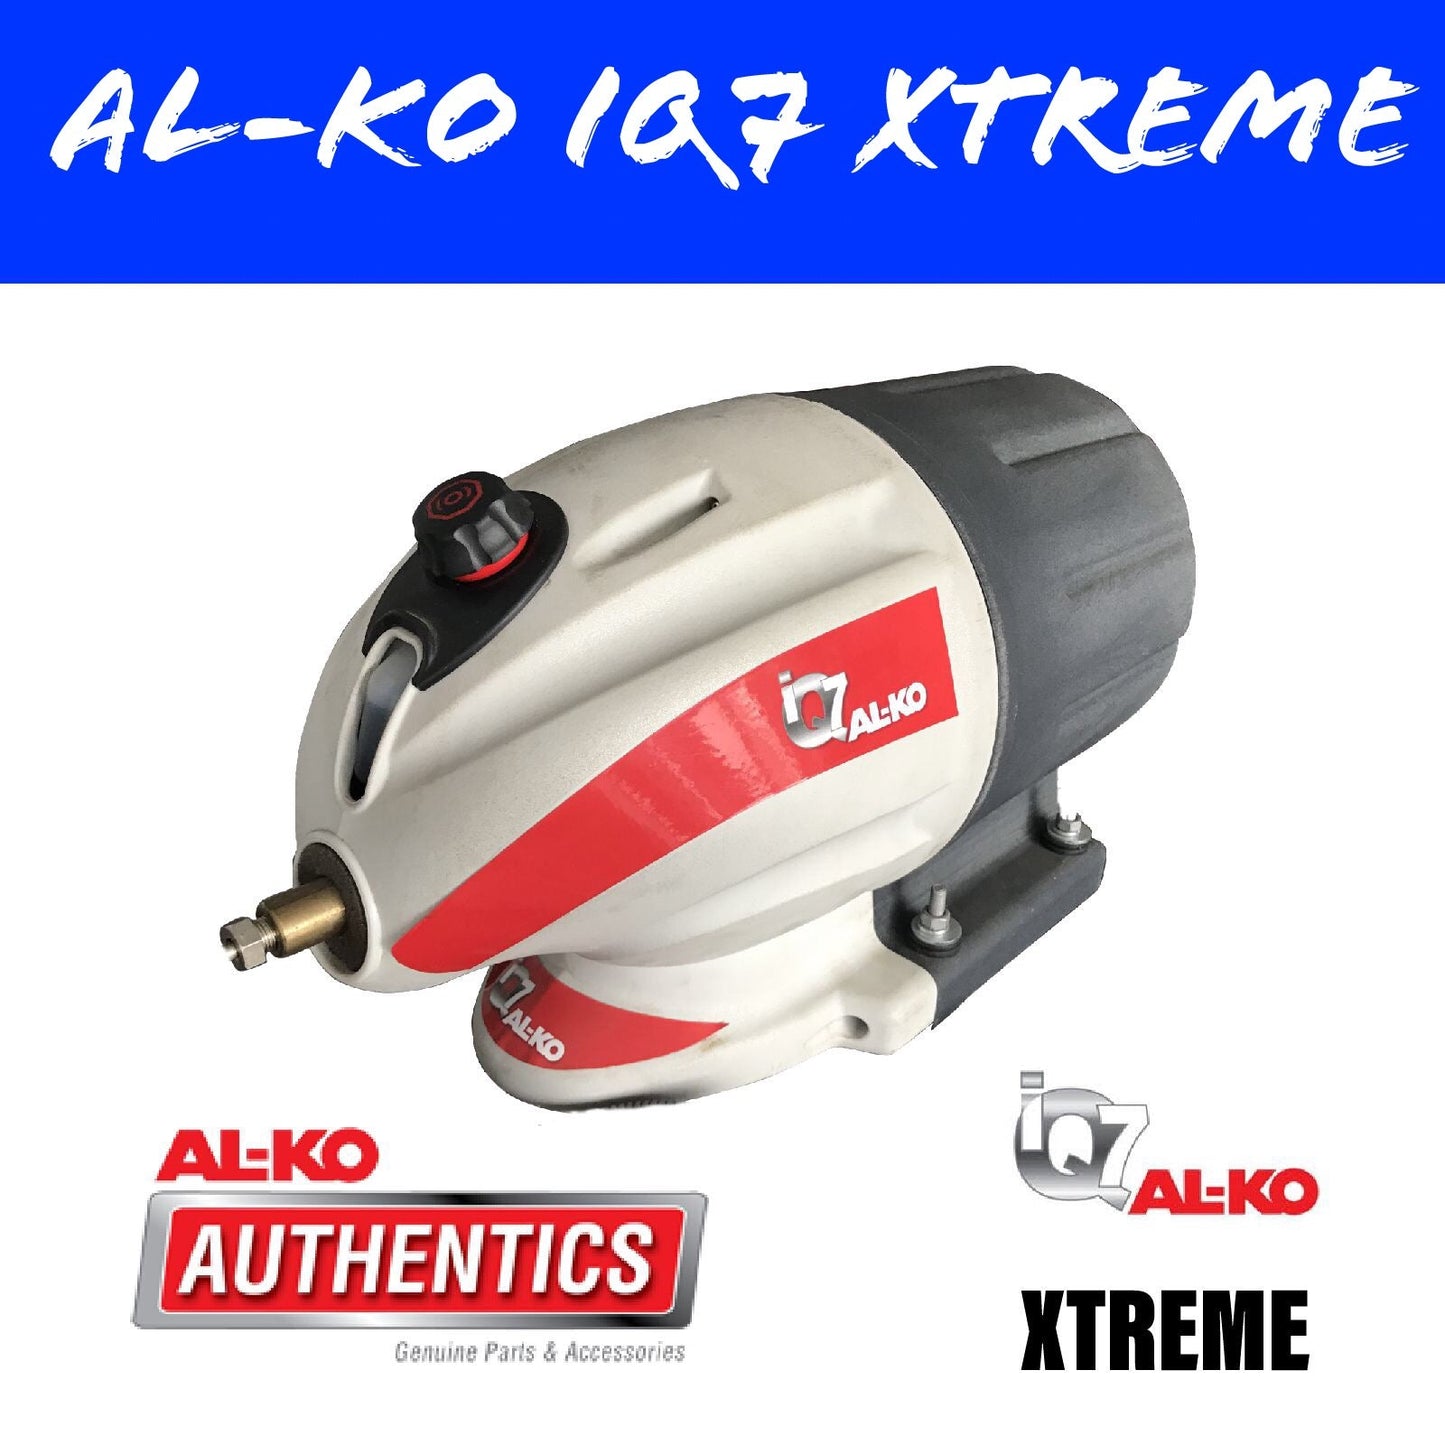 AL-KO IQ7 XTREME Brake Actuator